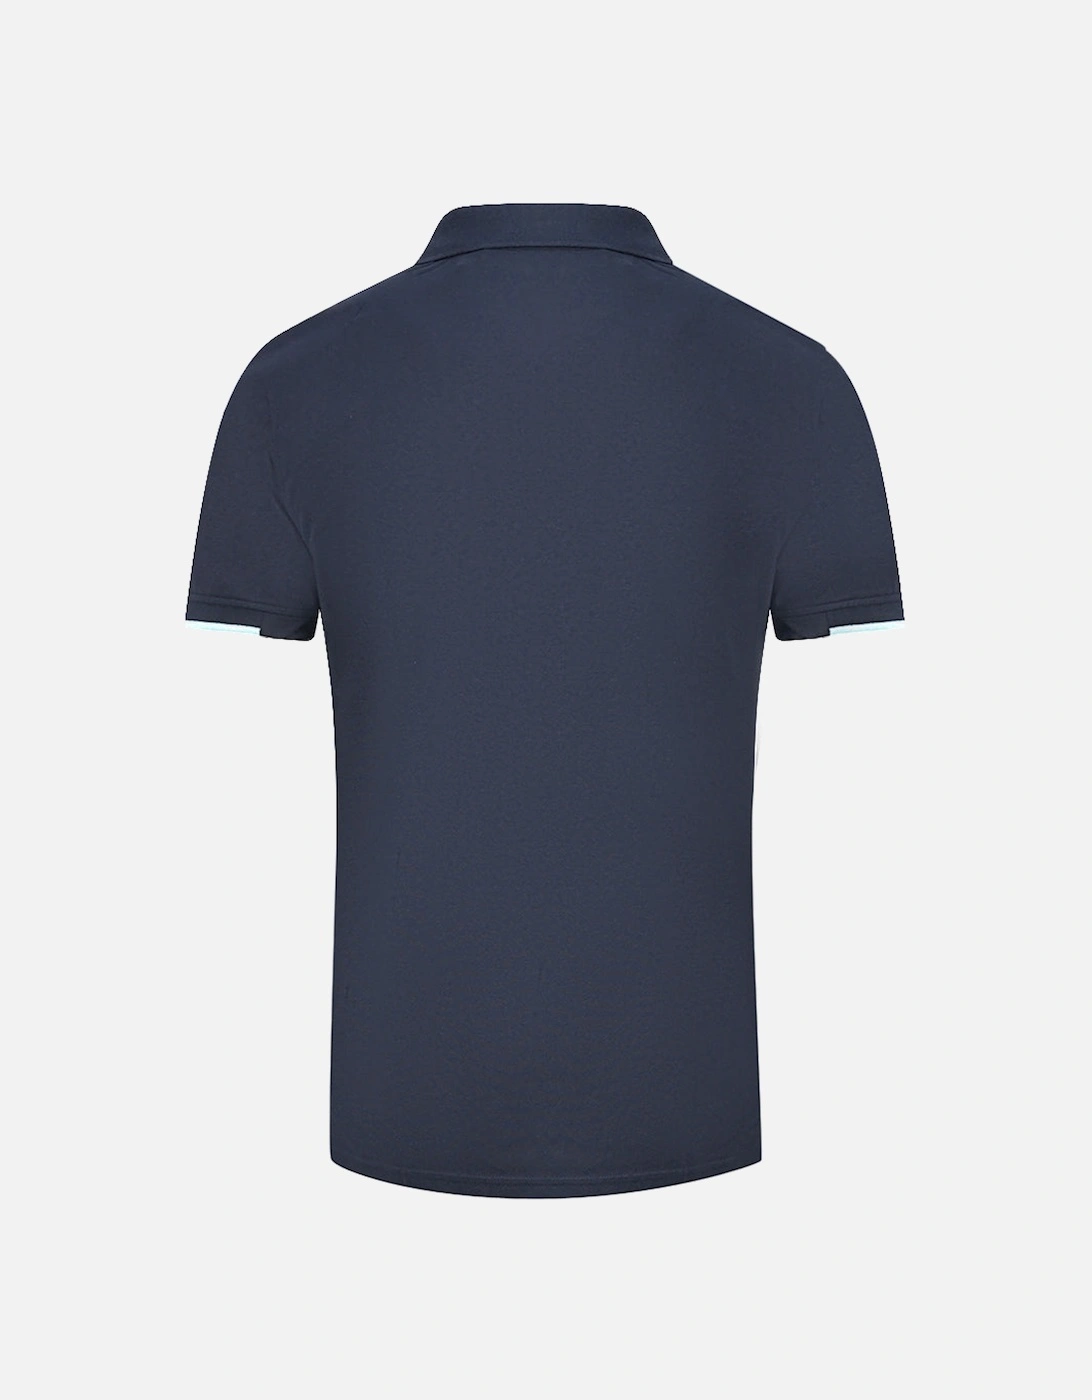 Lyle & Scott Navy Blue Andrew Polo Shirt